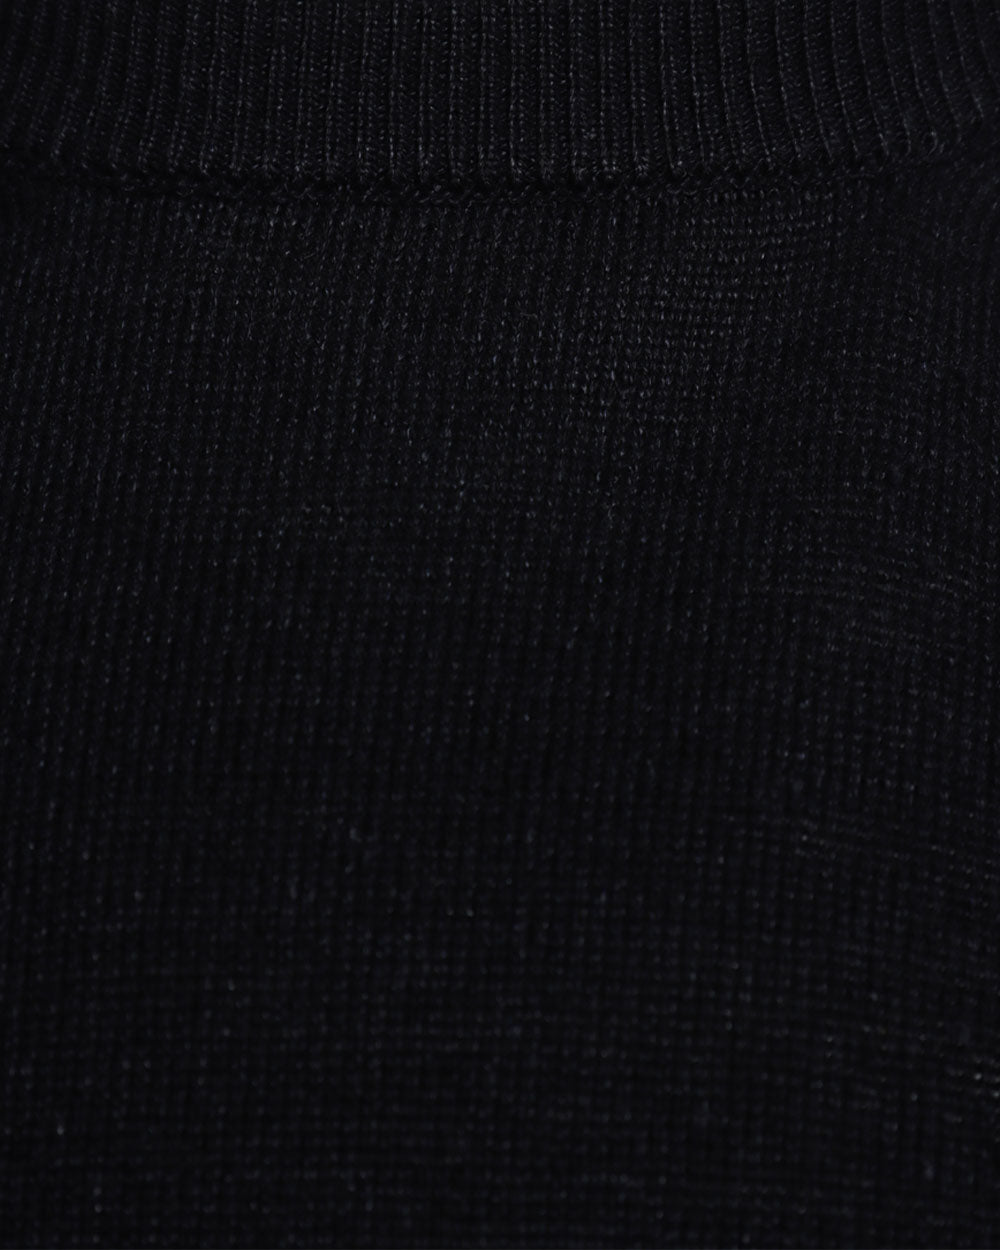 Black Linen Blend Crewneck Sweater